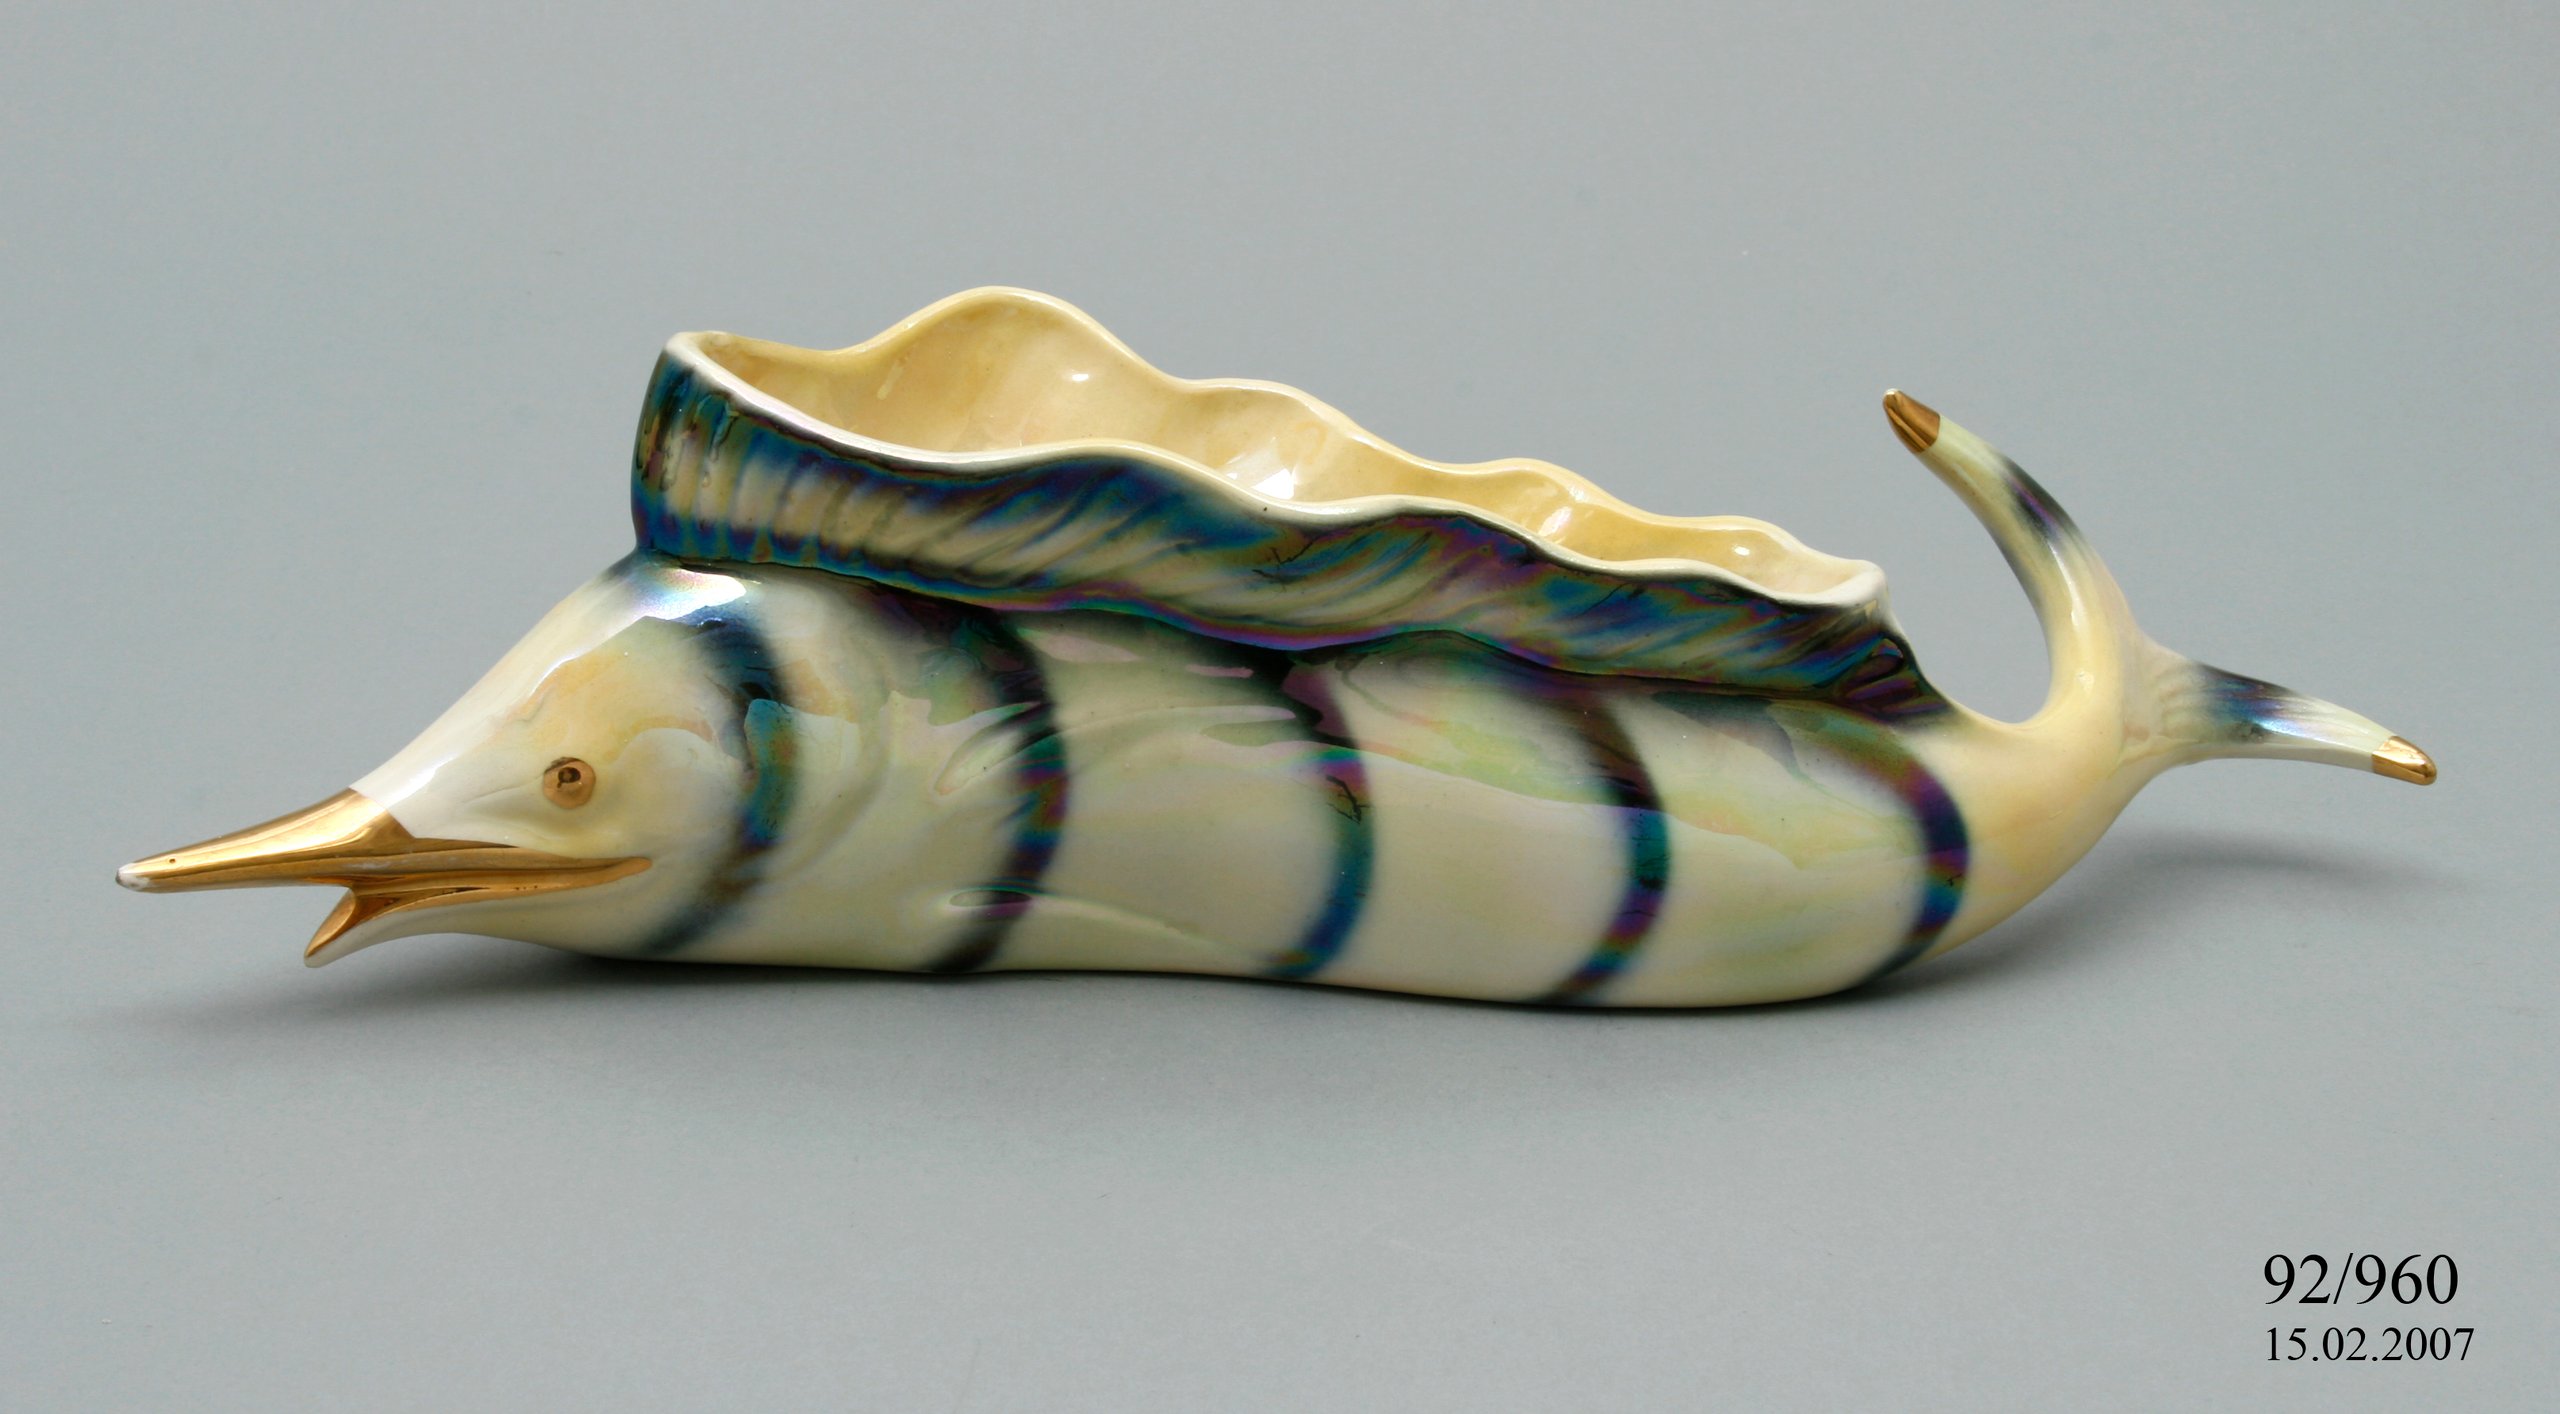 A Pates Potteries slip-cast vase in the shape of a swordfish.